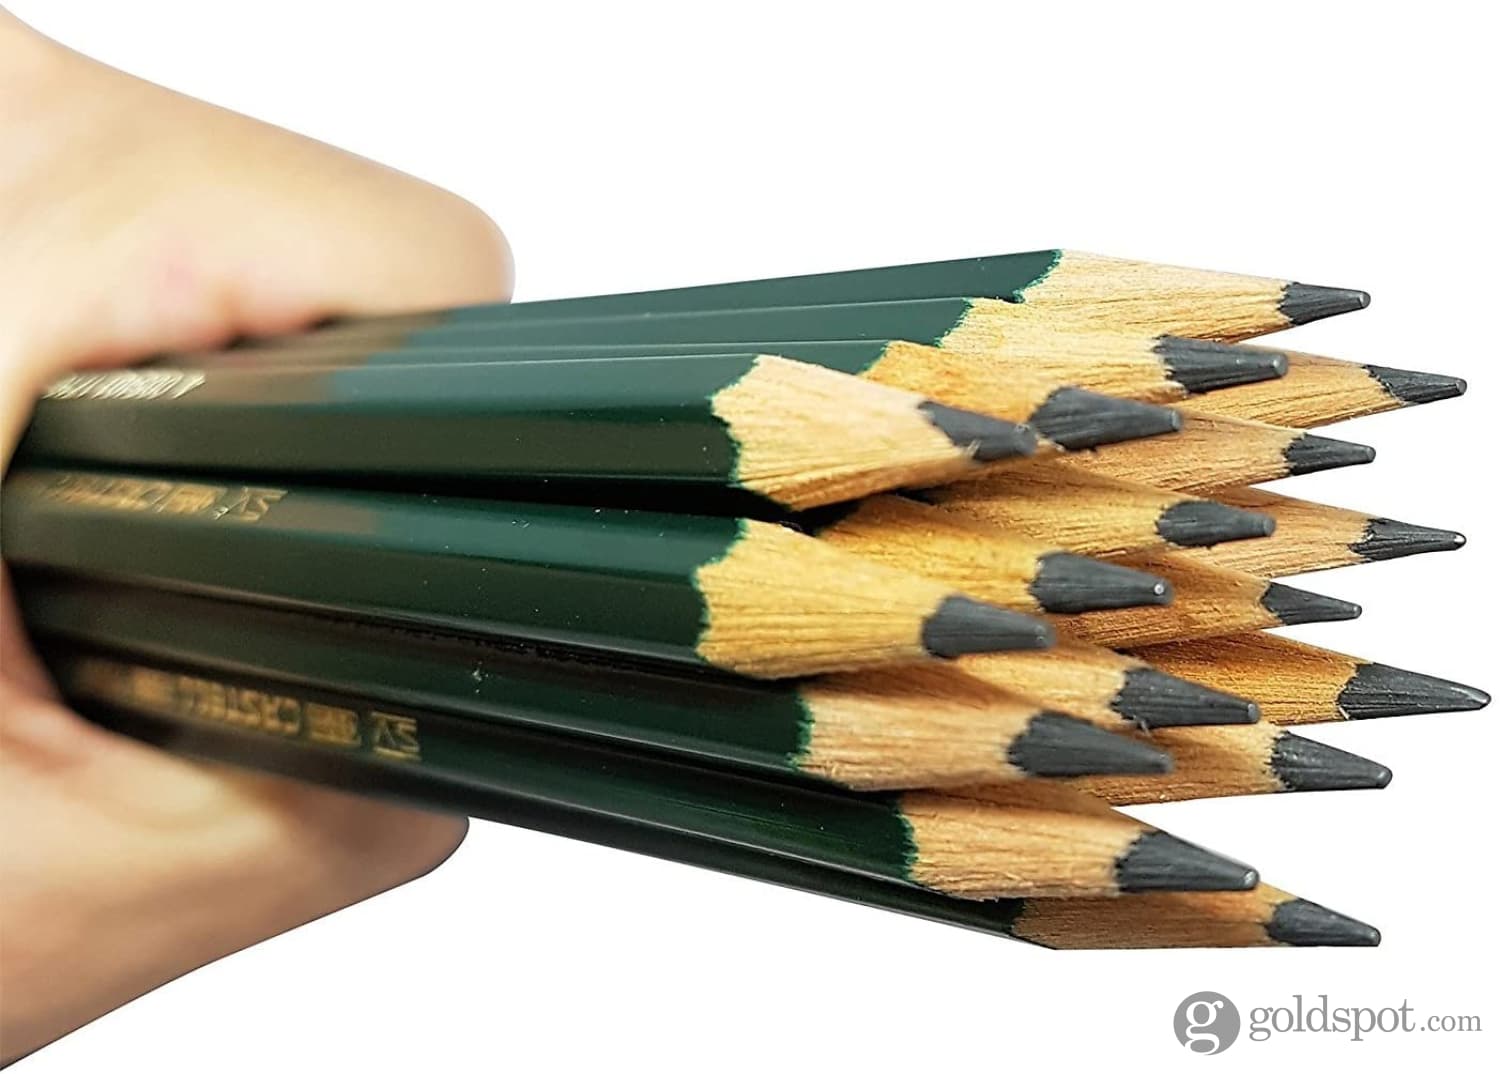 Castell 9000 graphite pencil, HB